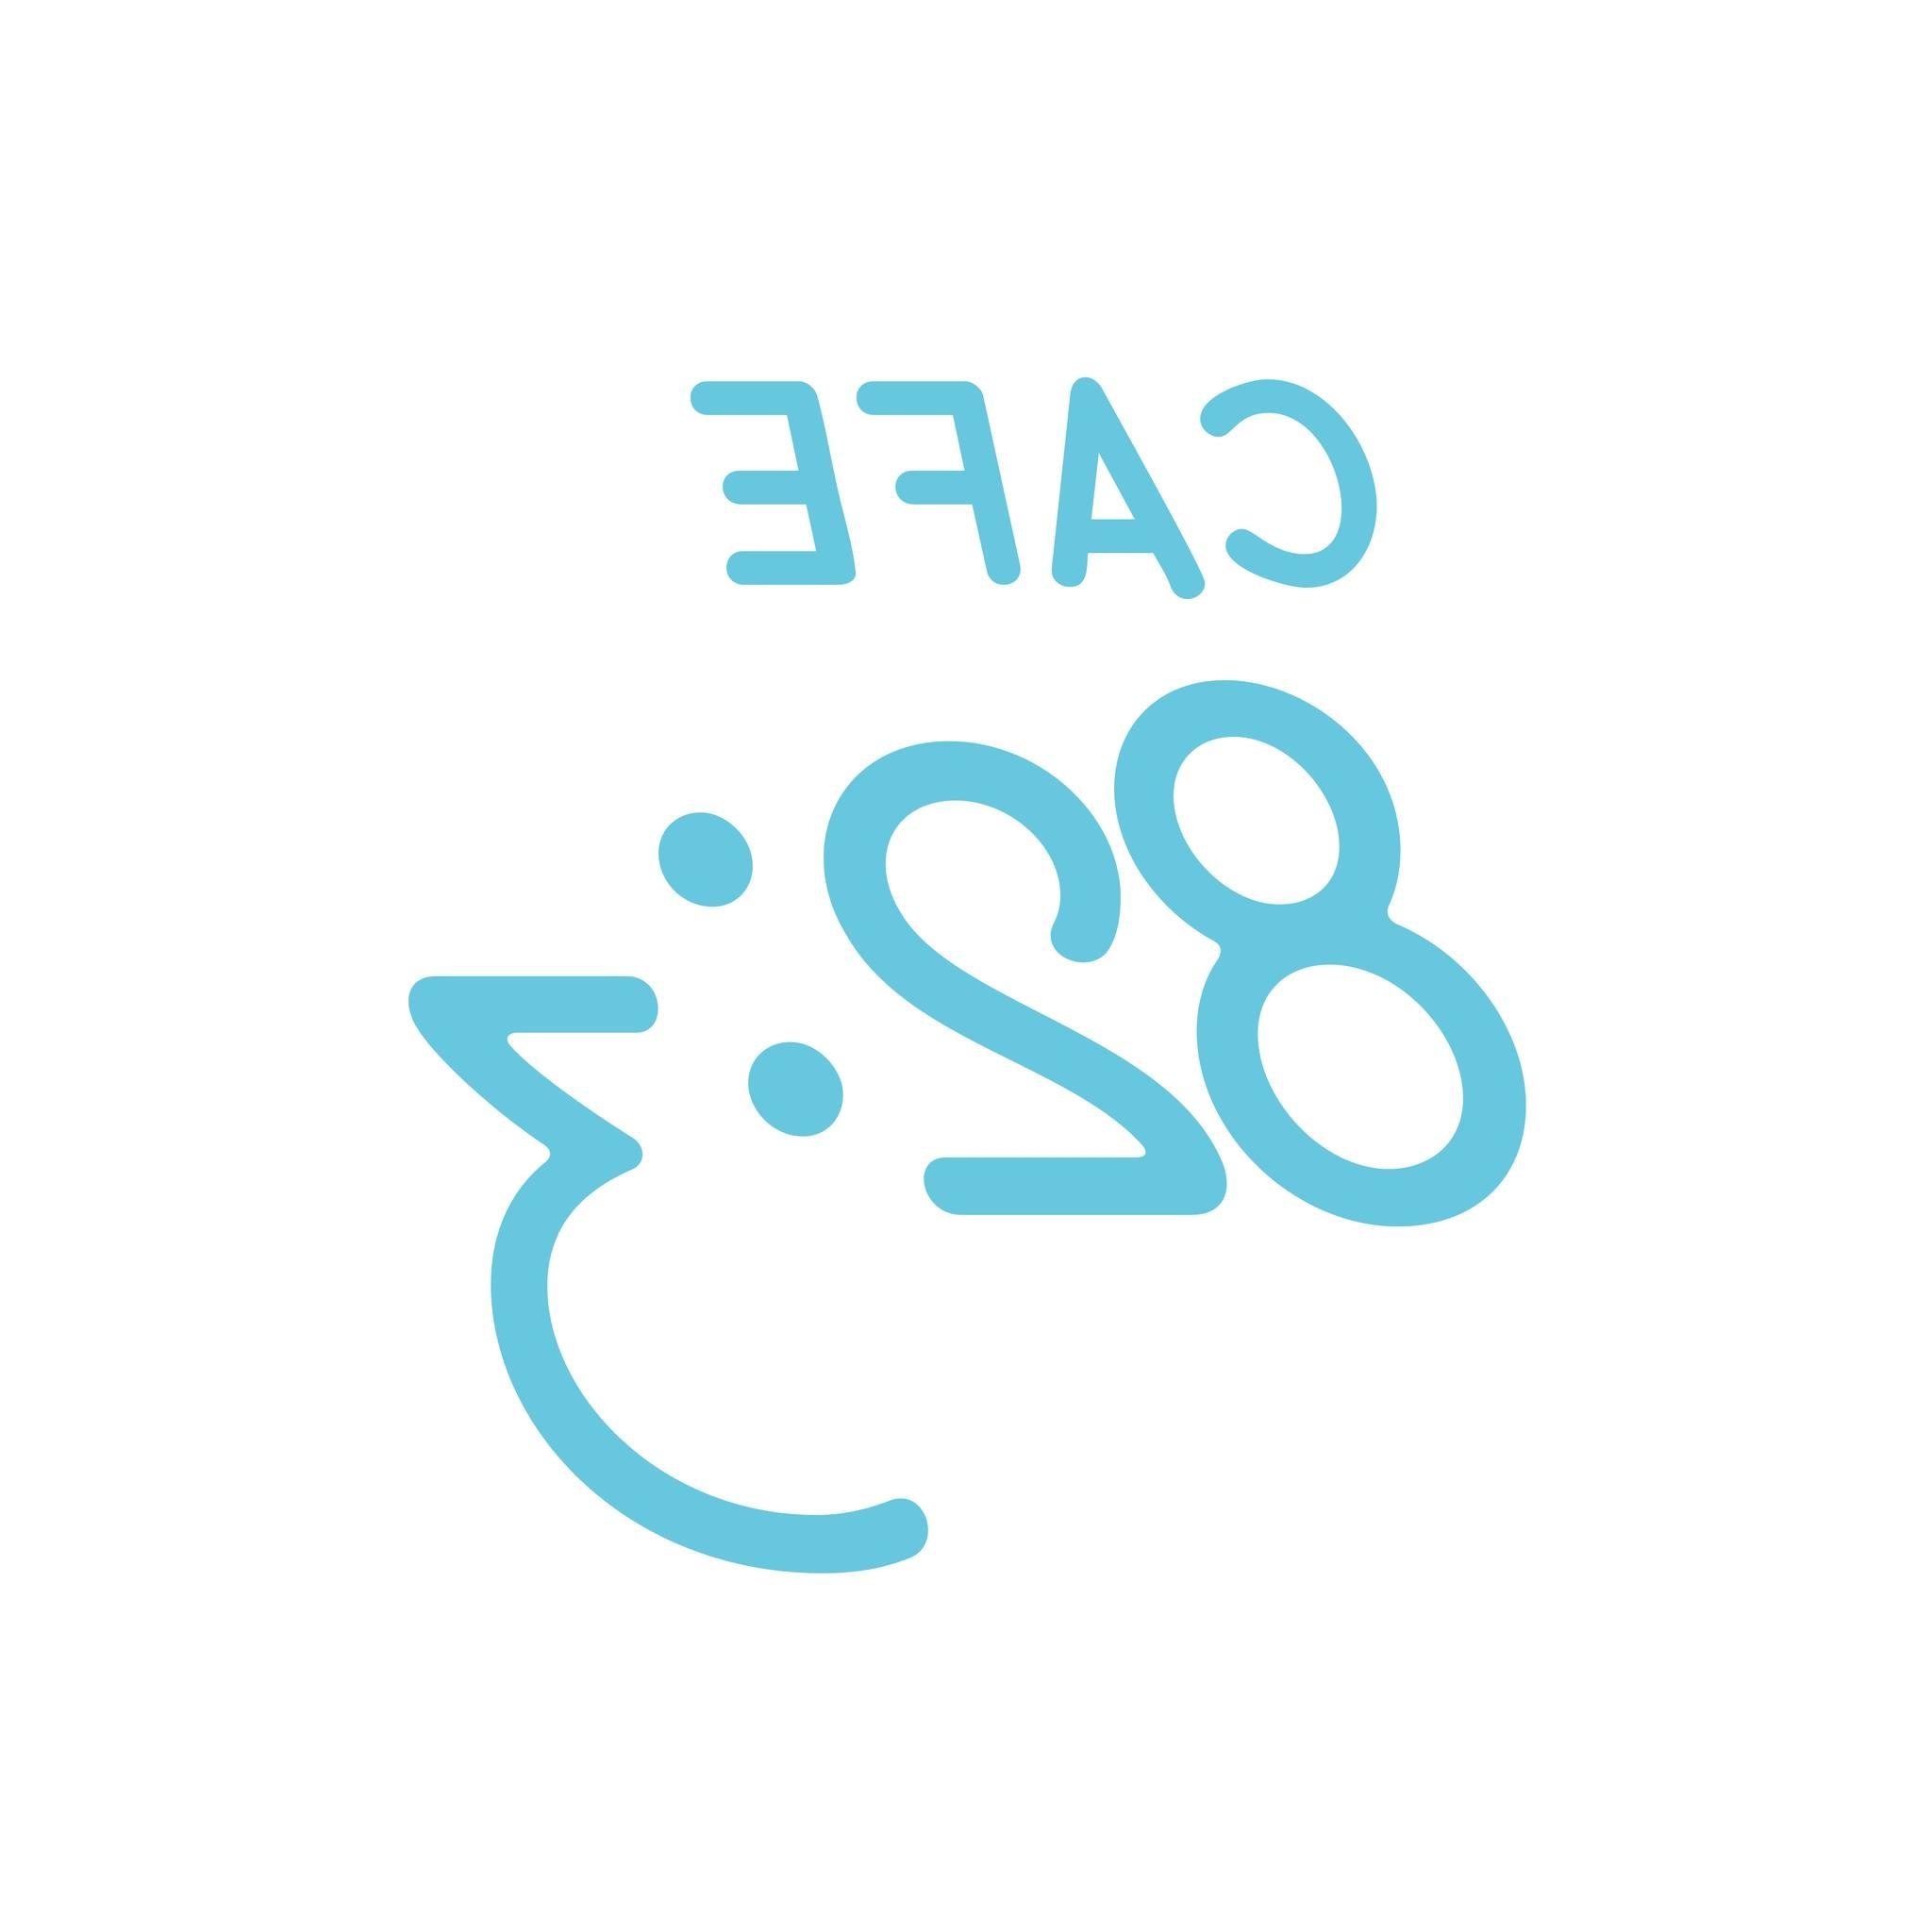 Café 82:3 logo